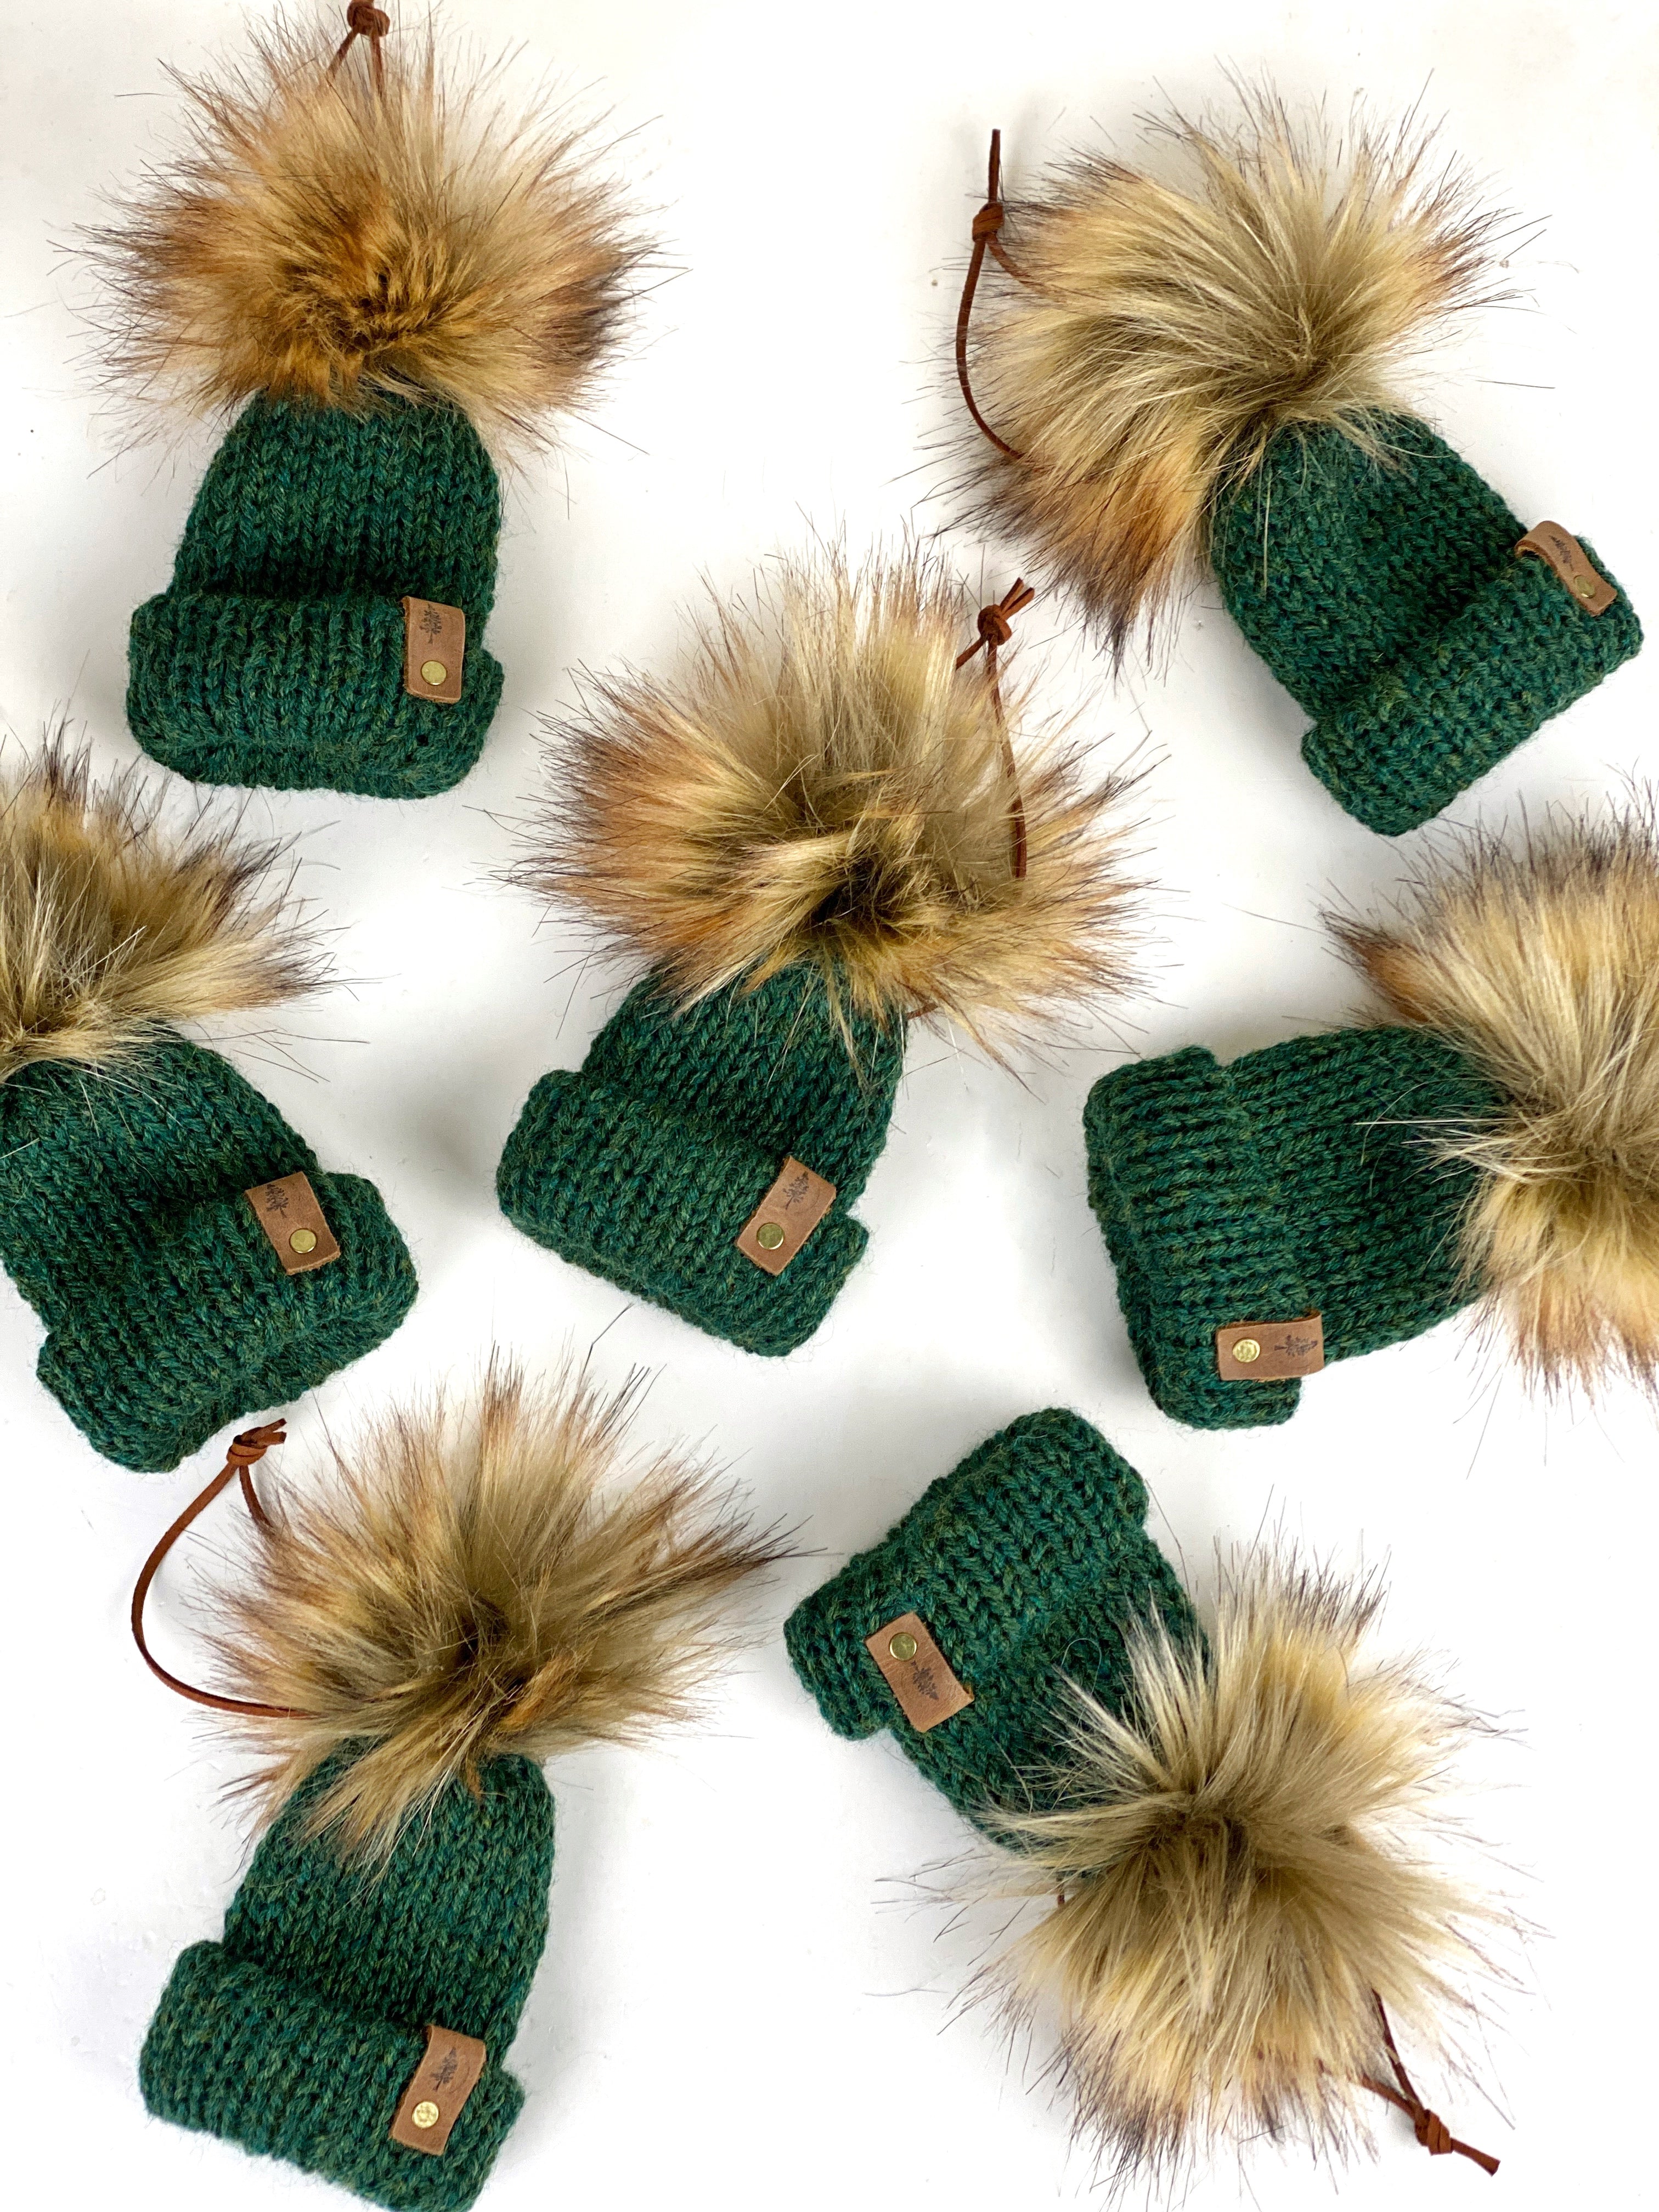 Wool Ease Mini Knit Hat Purse Charm or Tree Ornament, Acrylic/Wool Blend Folded Brim Tiny Hat Ornaments, Miniature Beanie Christmas Decor